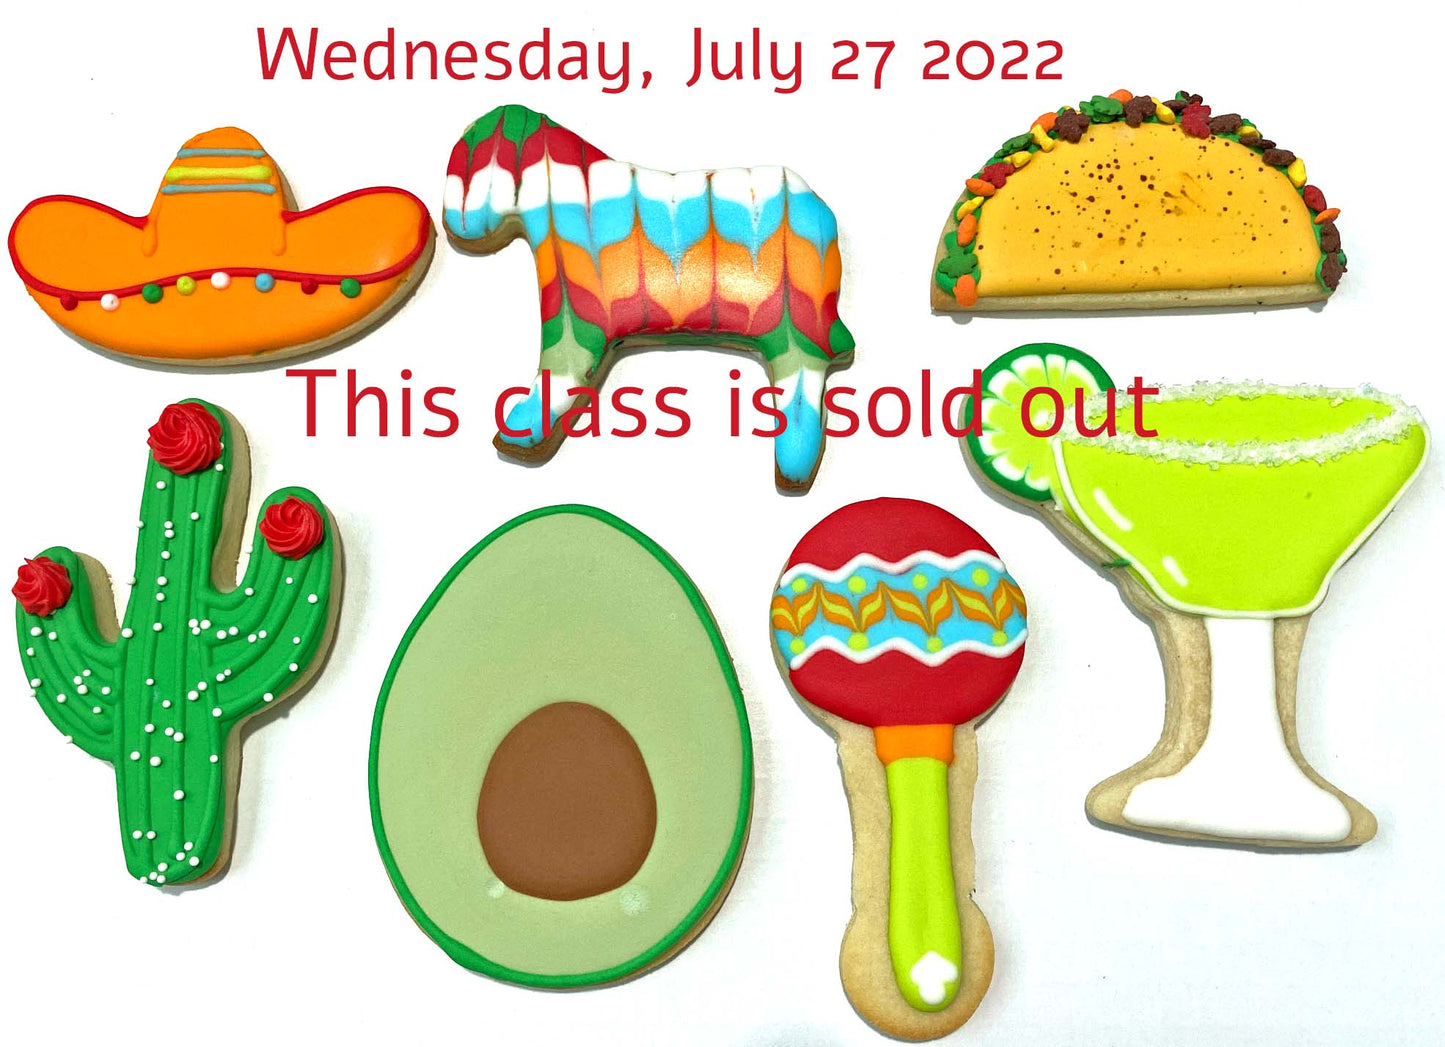 Wednesday 7/27/2022: Sugar Cookie Decorating class - Fiesta Theme (Please read class details below)